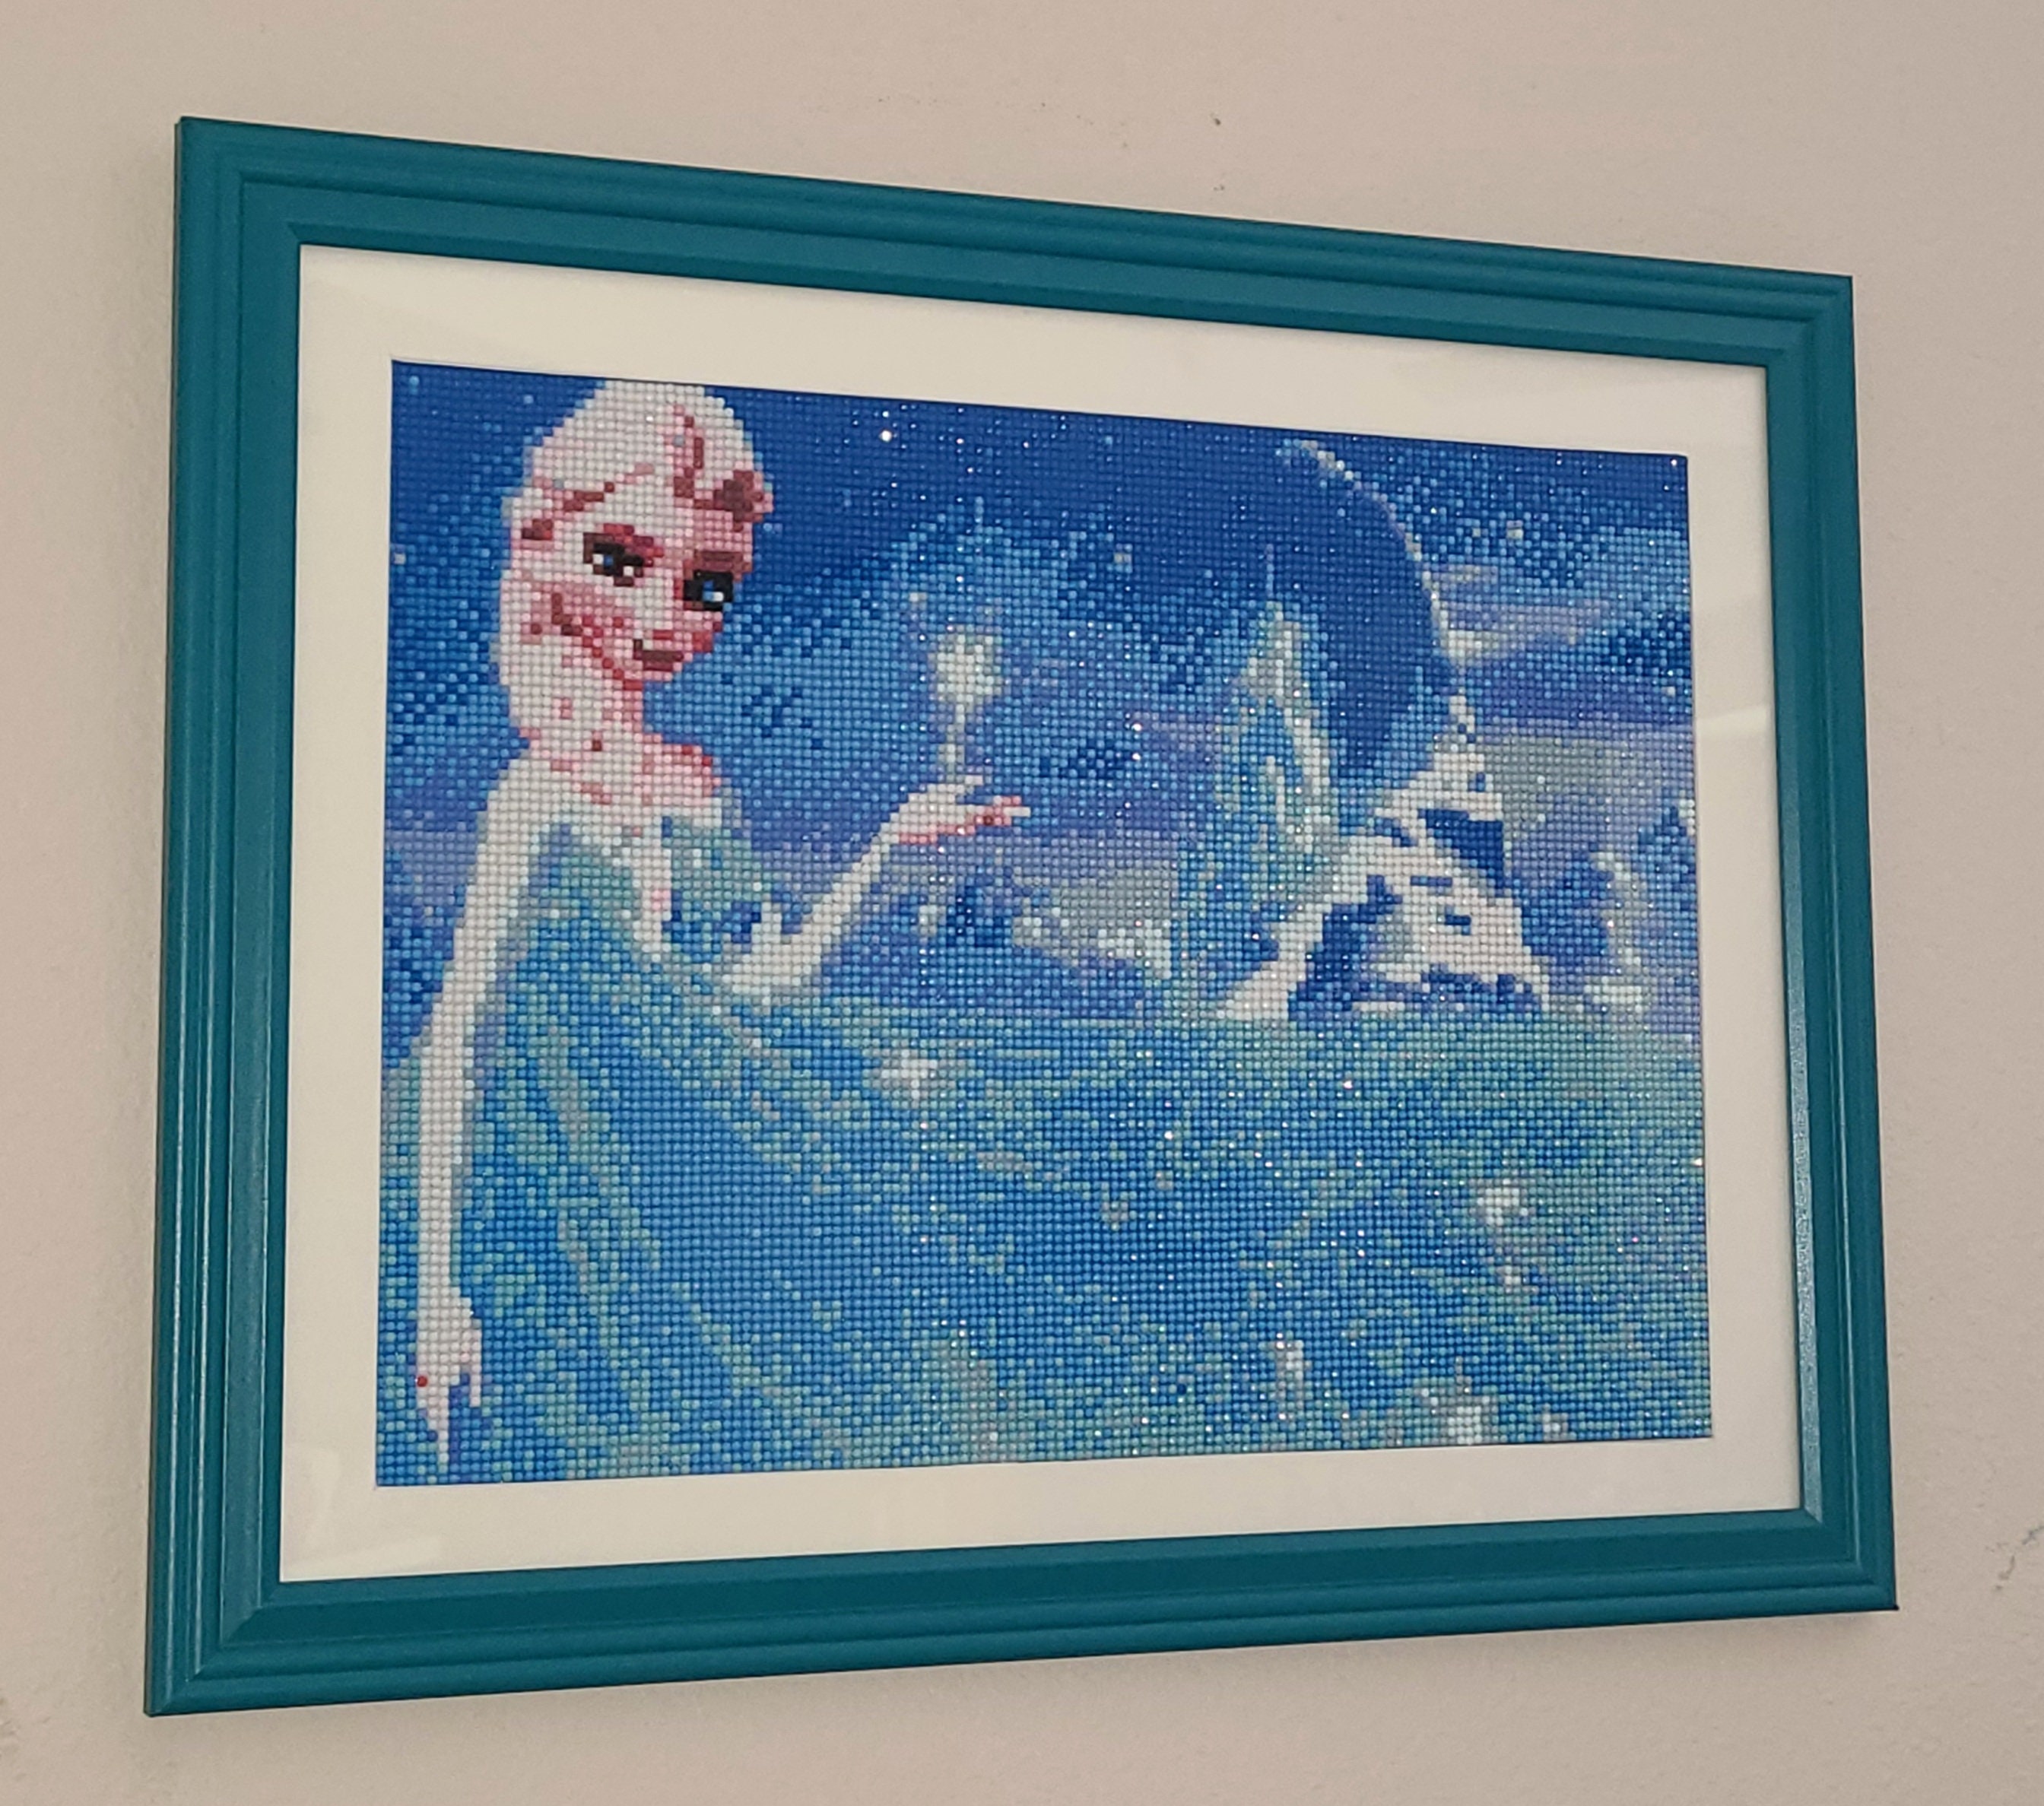 Pintura diamante Frozen Disney